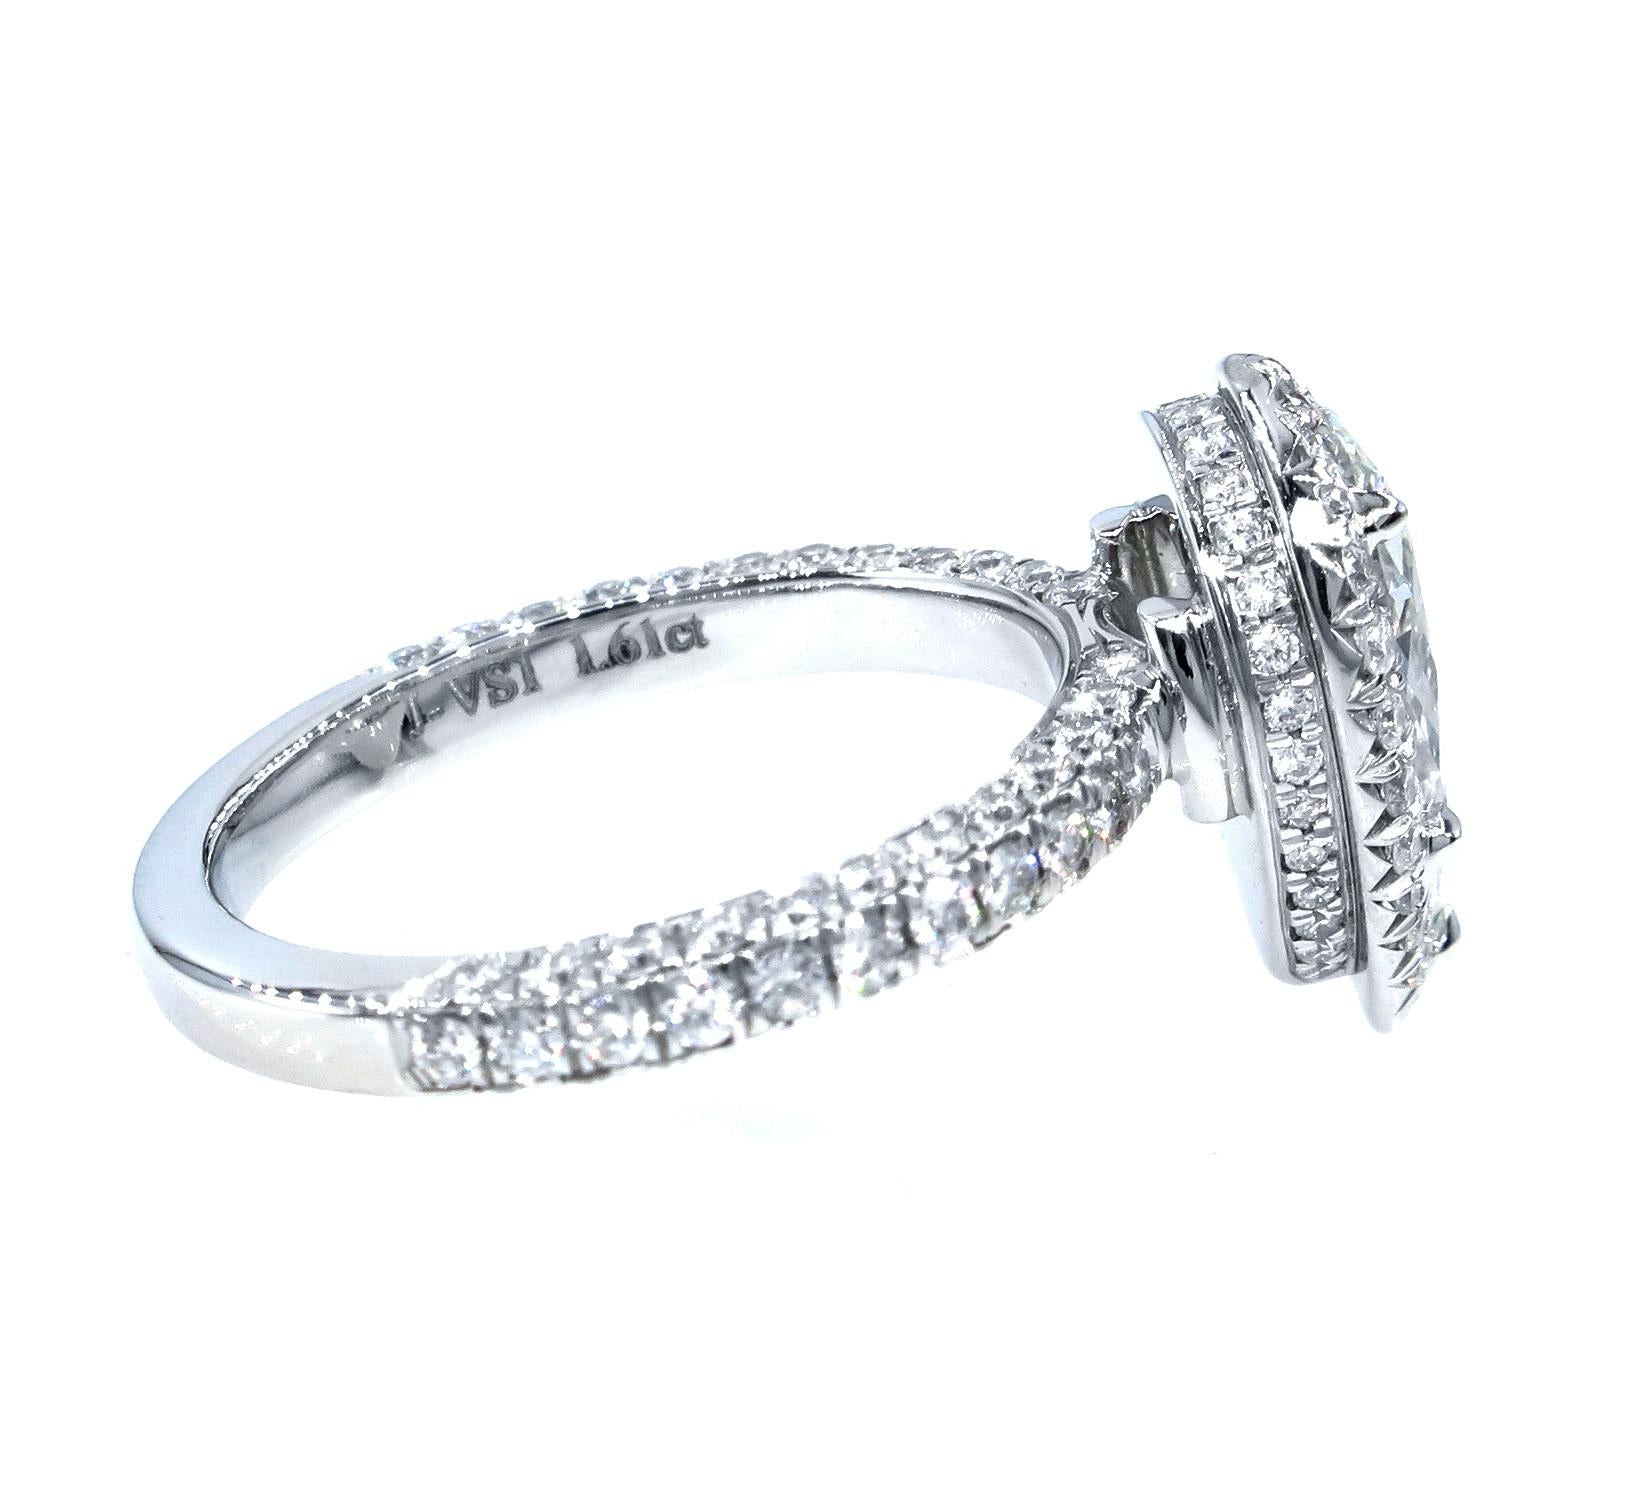 2.61 carat diamond ring